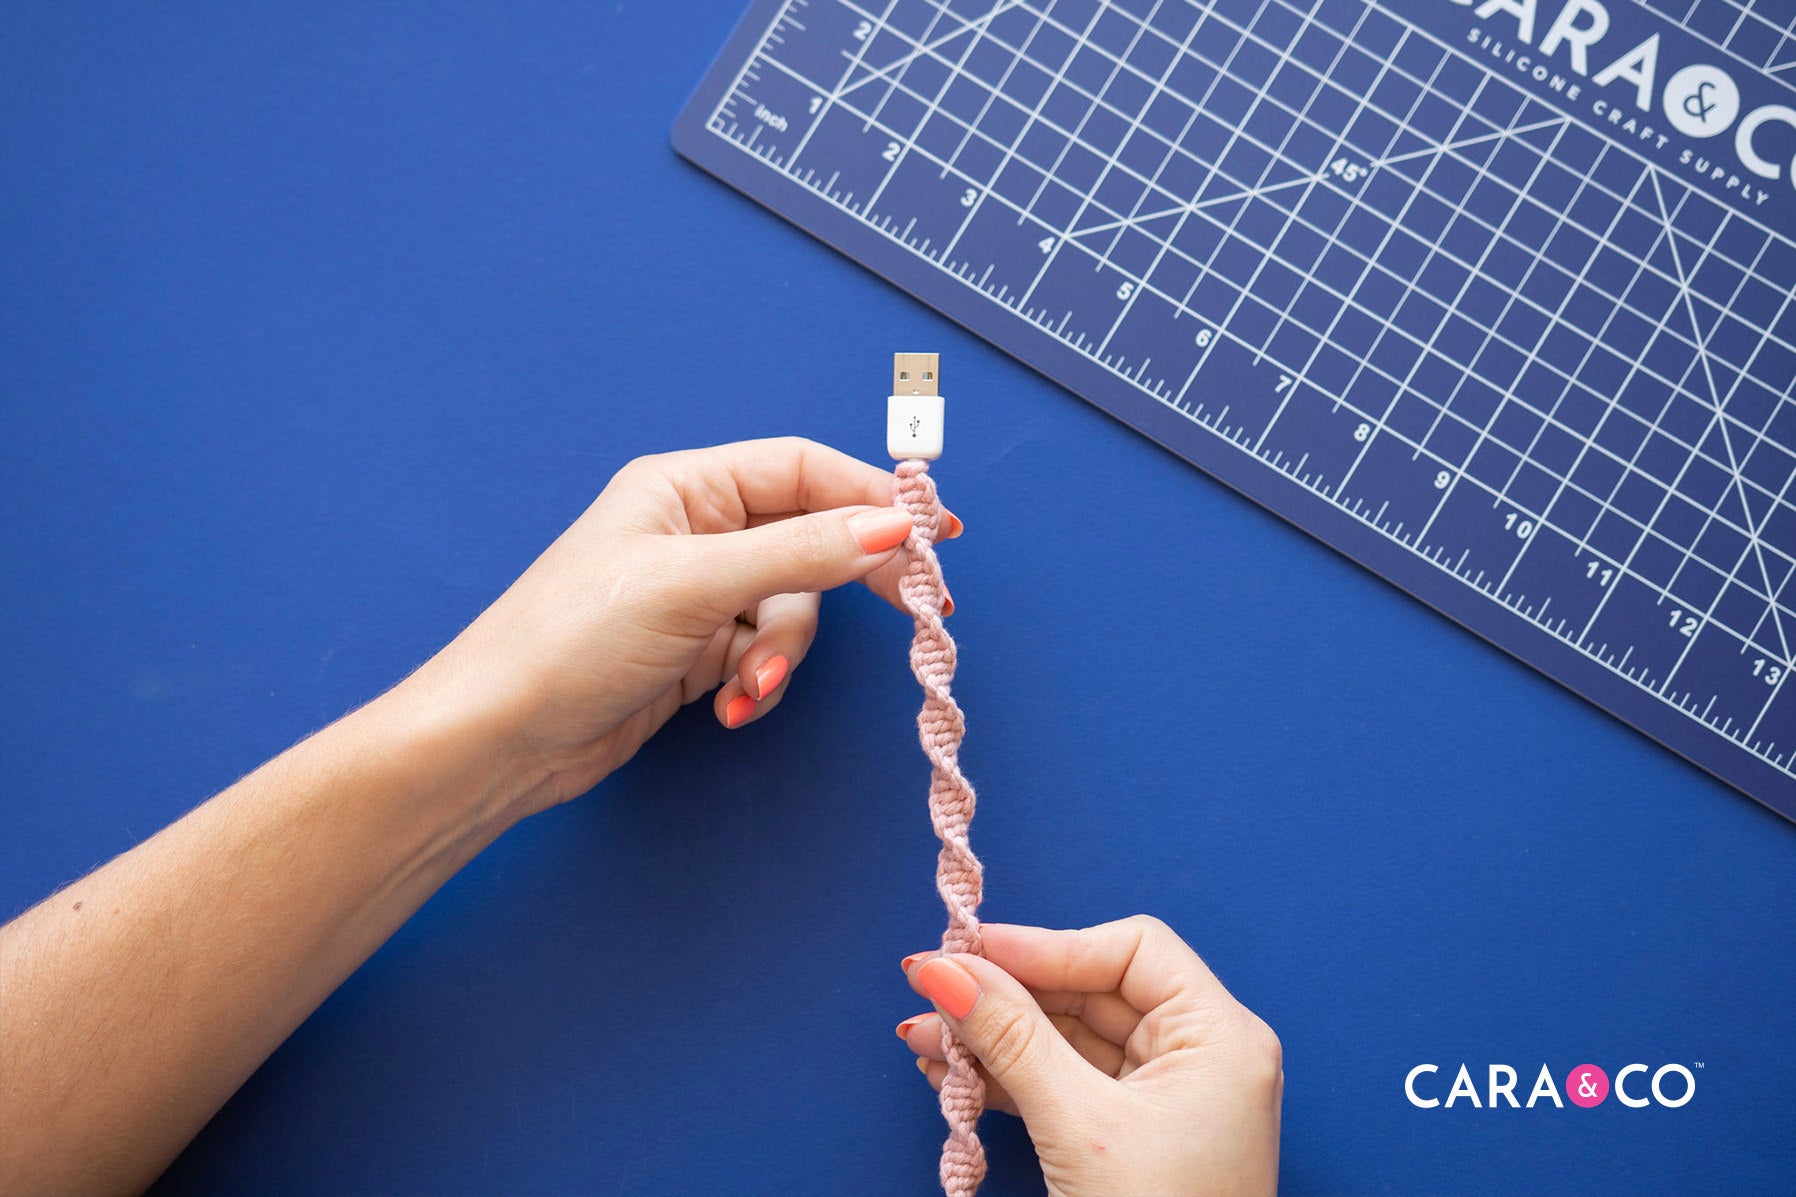 Easy macrame crafts - DIY phone charging cord - Cara & Co